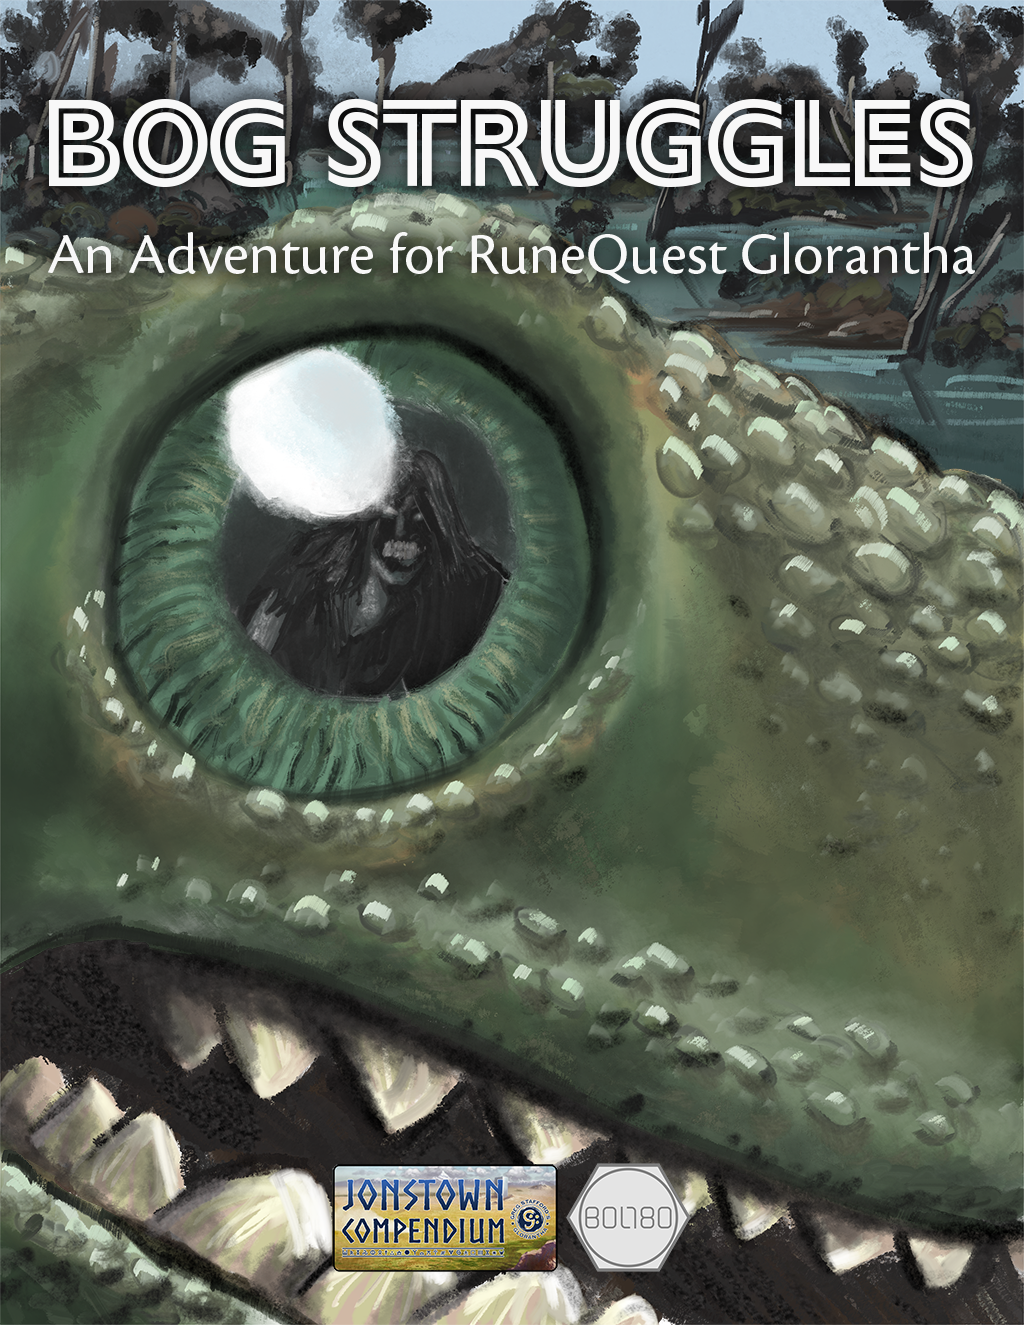 Bog_Struggles_Cover_Media_small-096522